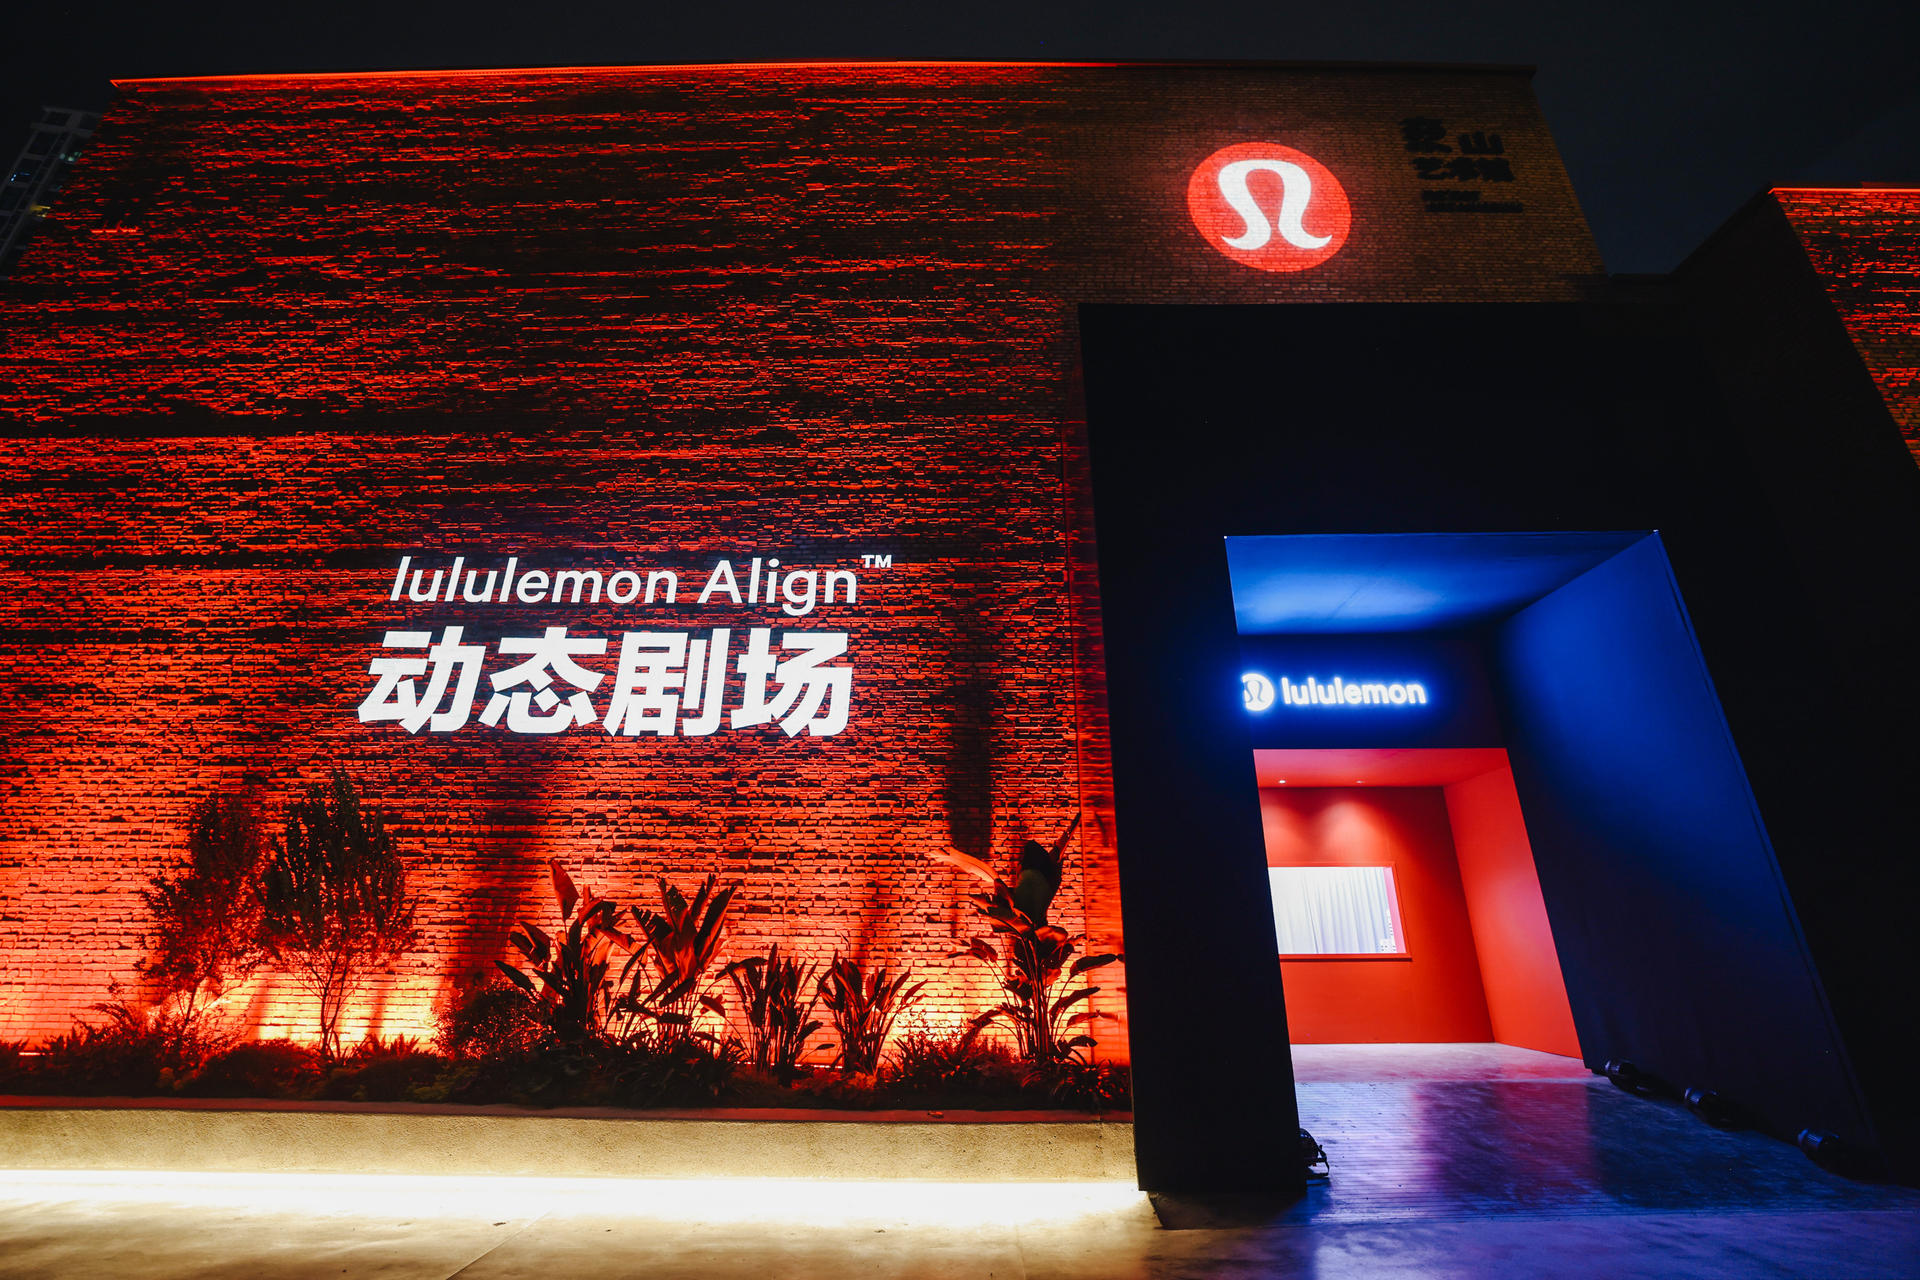 lululemon 天猫超级品牌日，「Align™ 动态剧场」引领 Z 世代投入自在